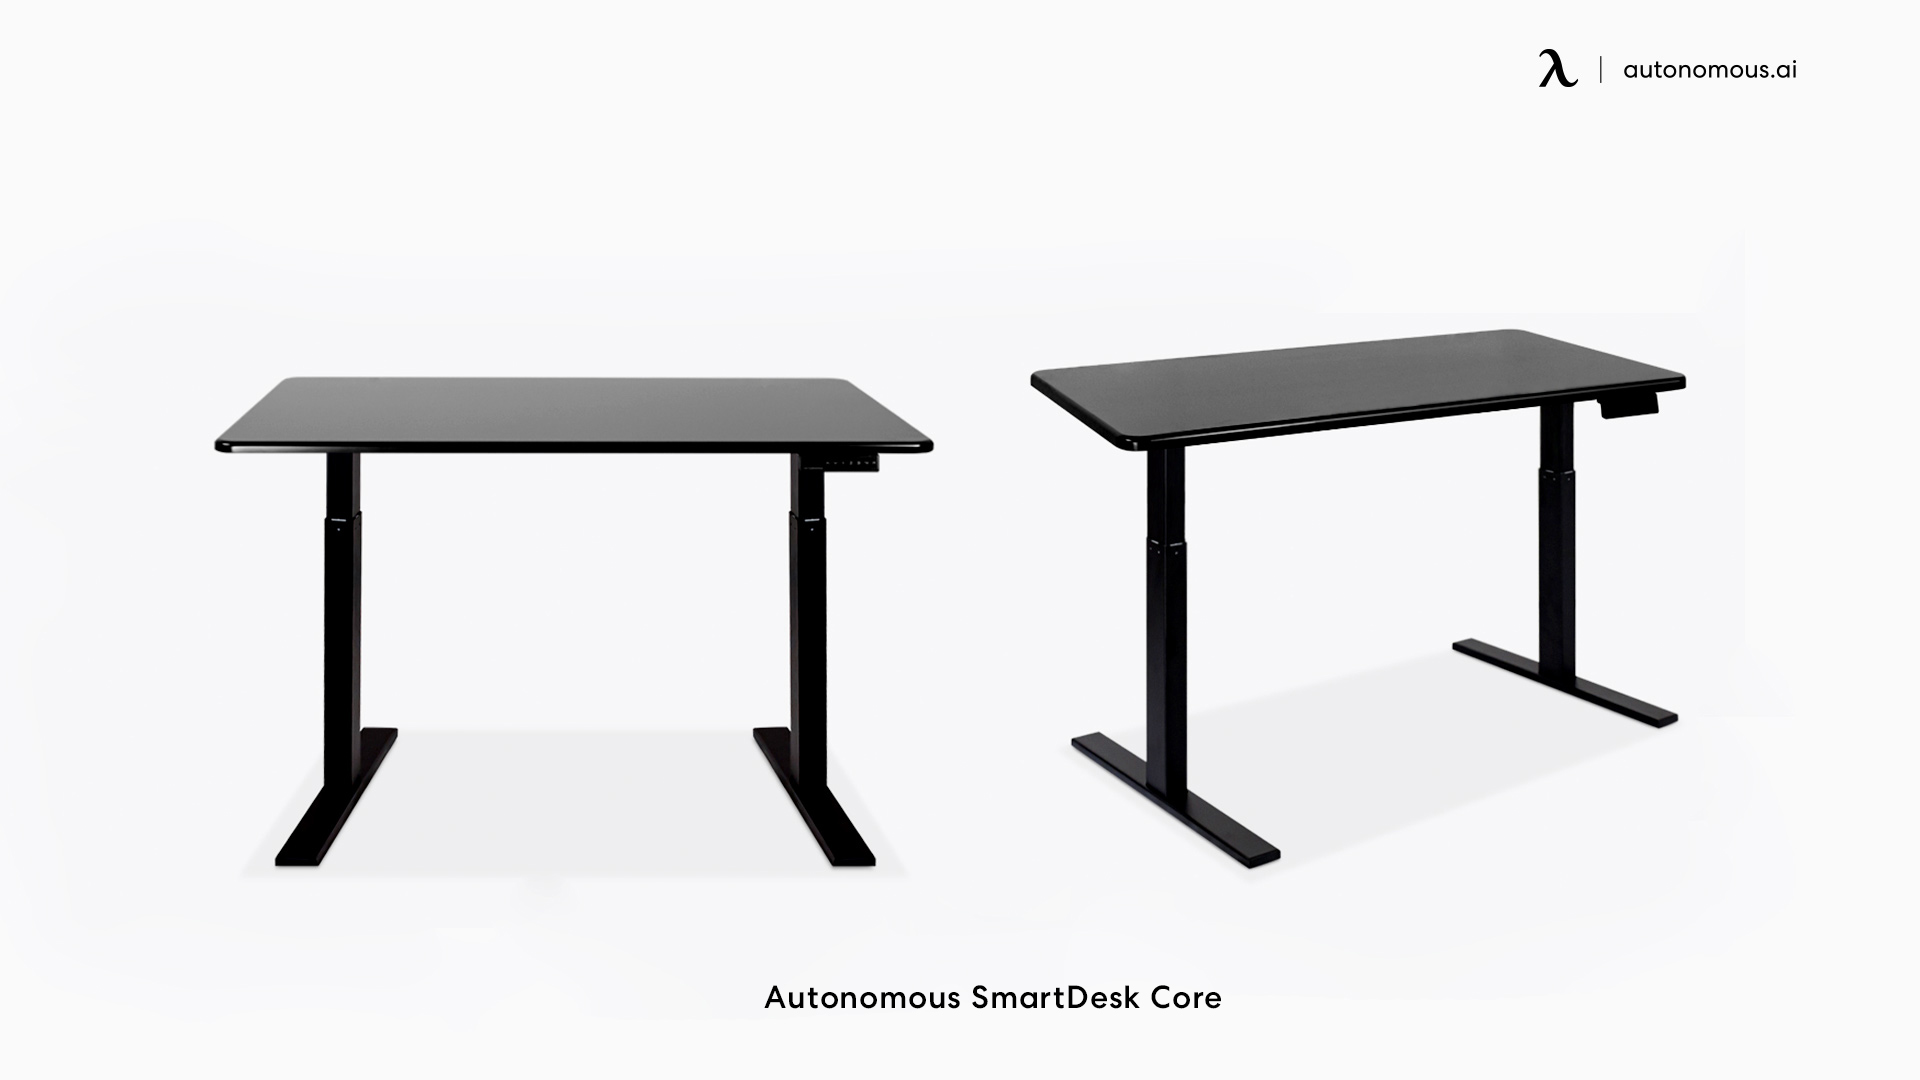 Autonomous SmartDesk Core small student desk